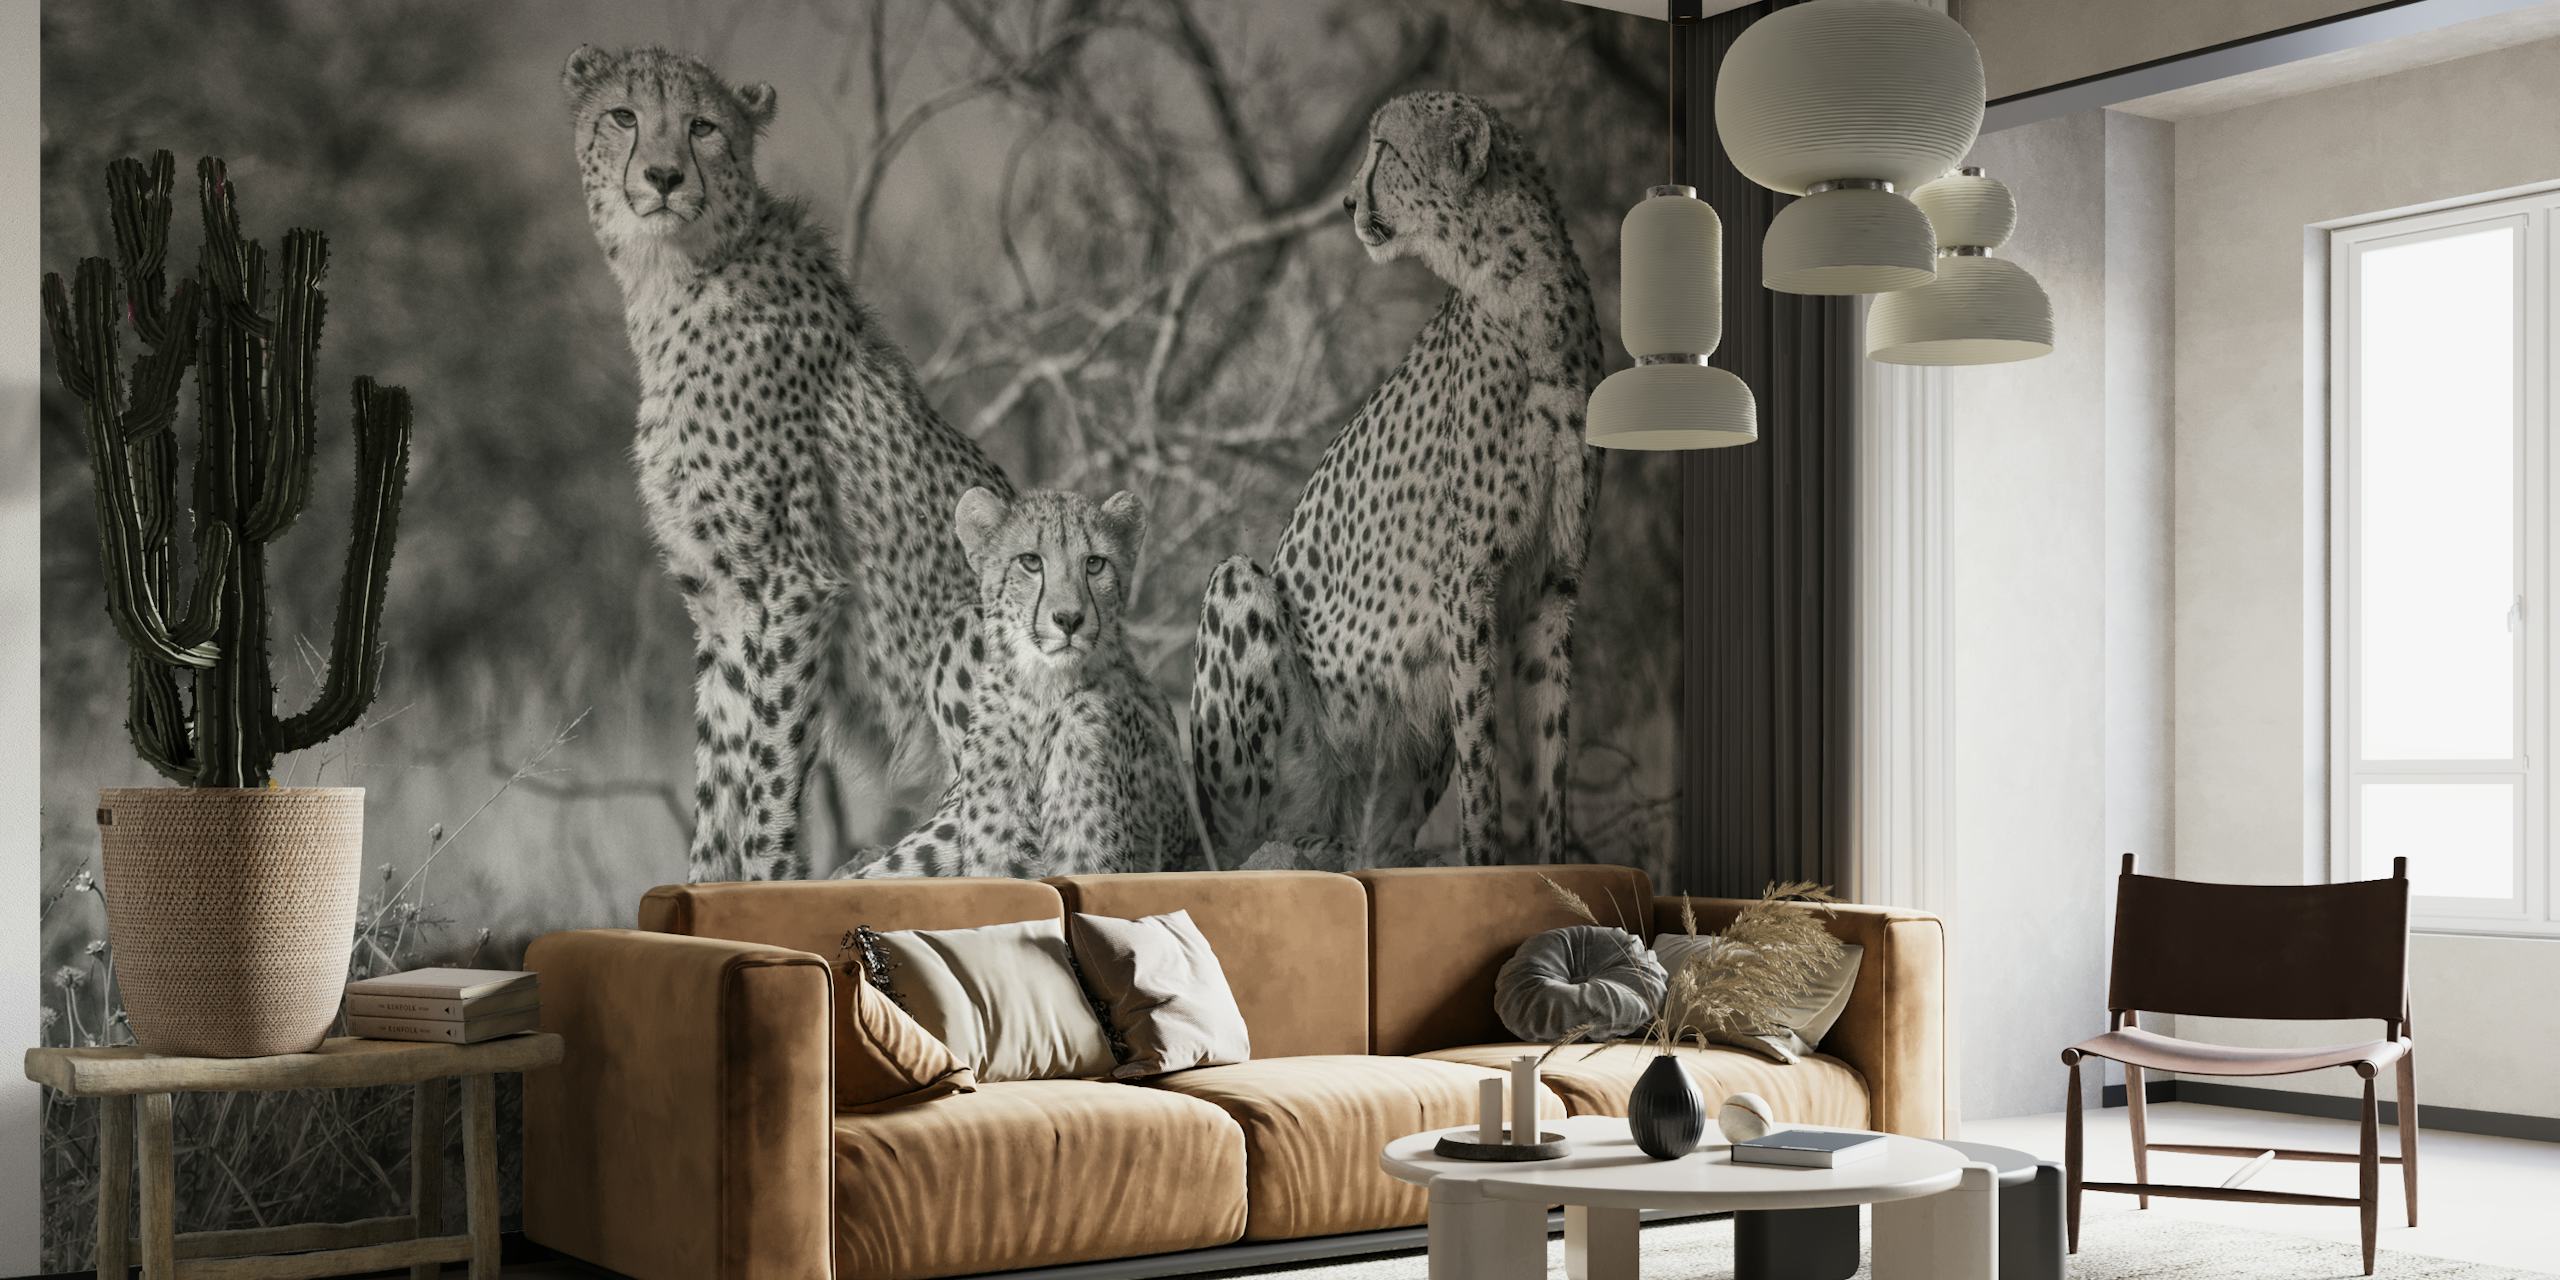 Black and white wall mural of three cheetahs